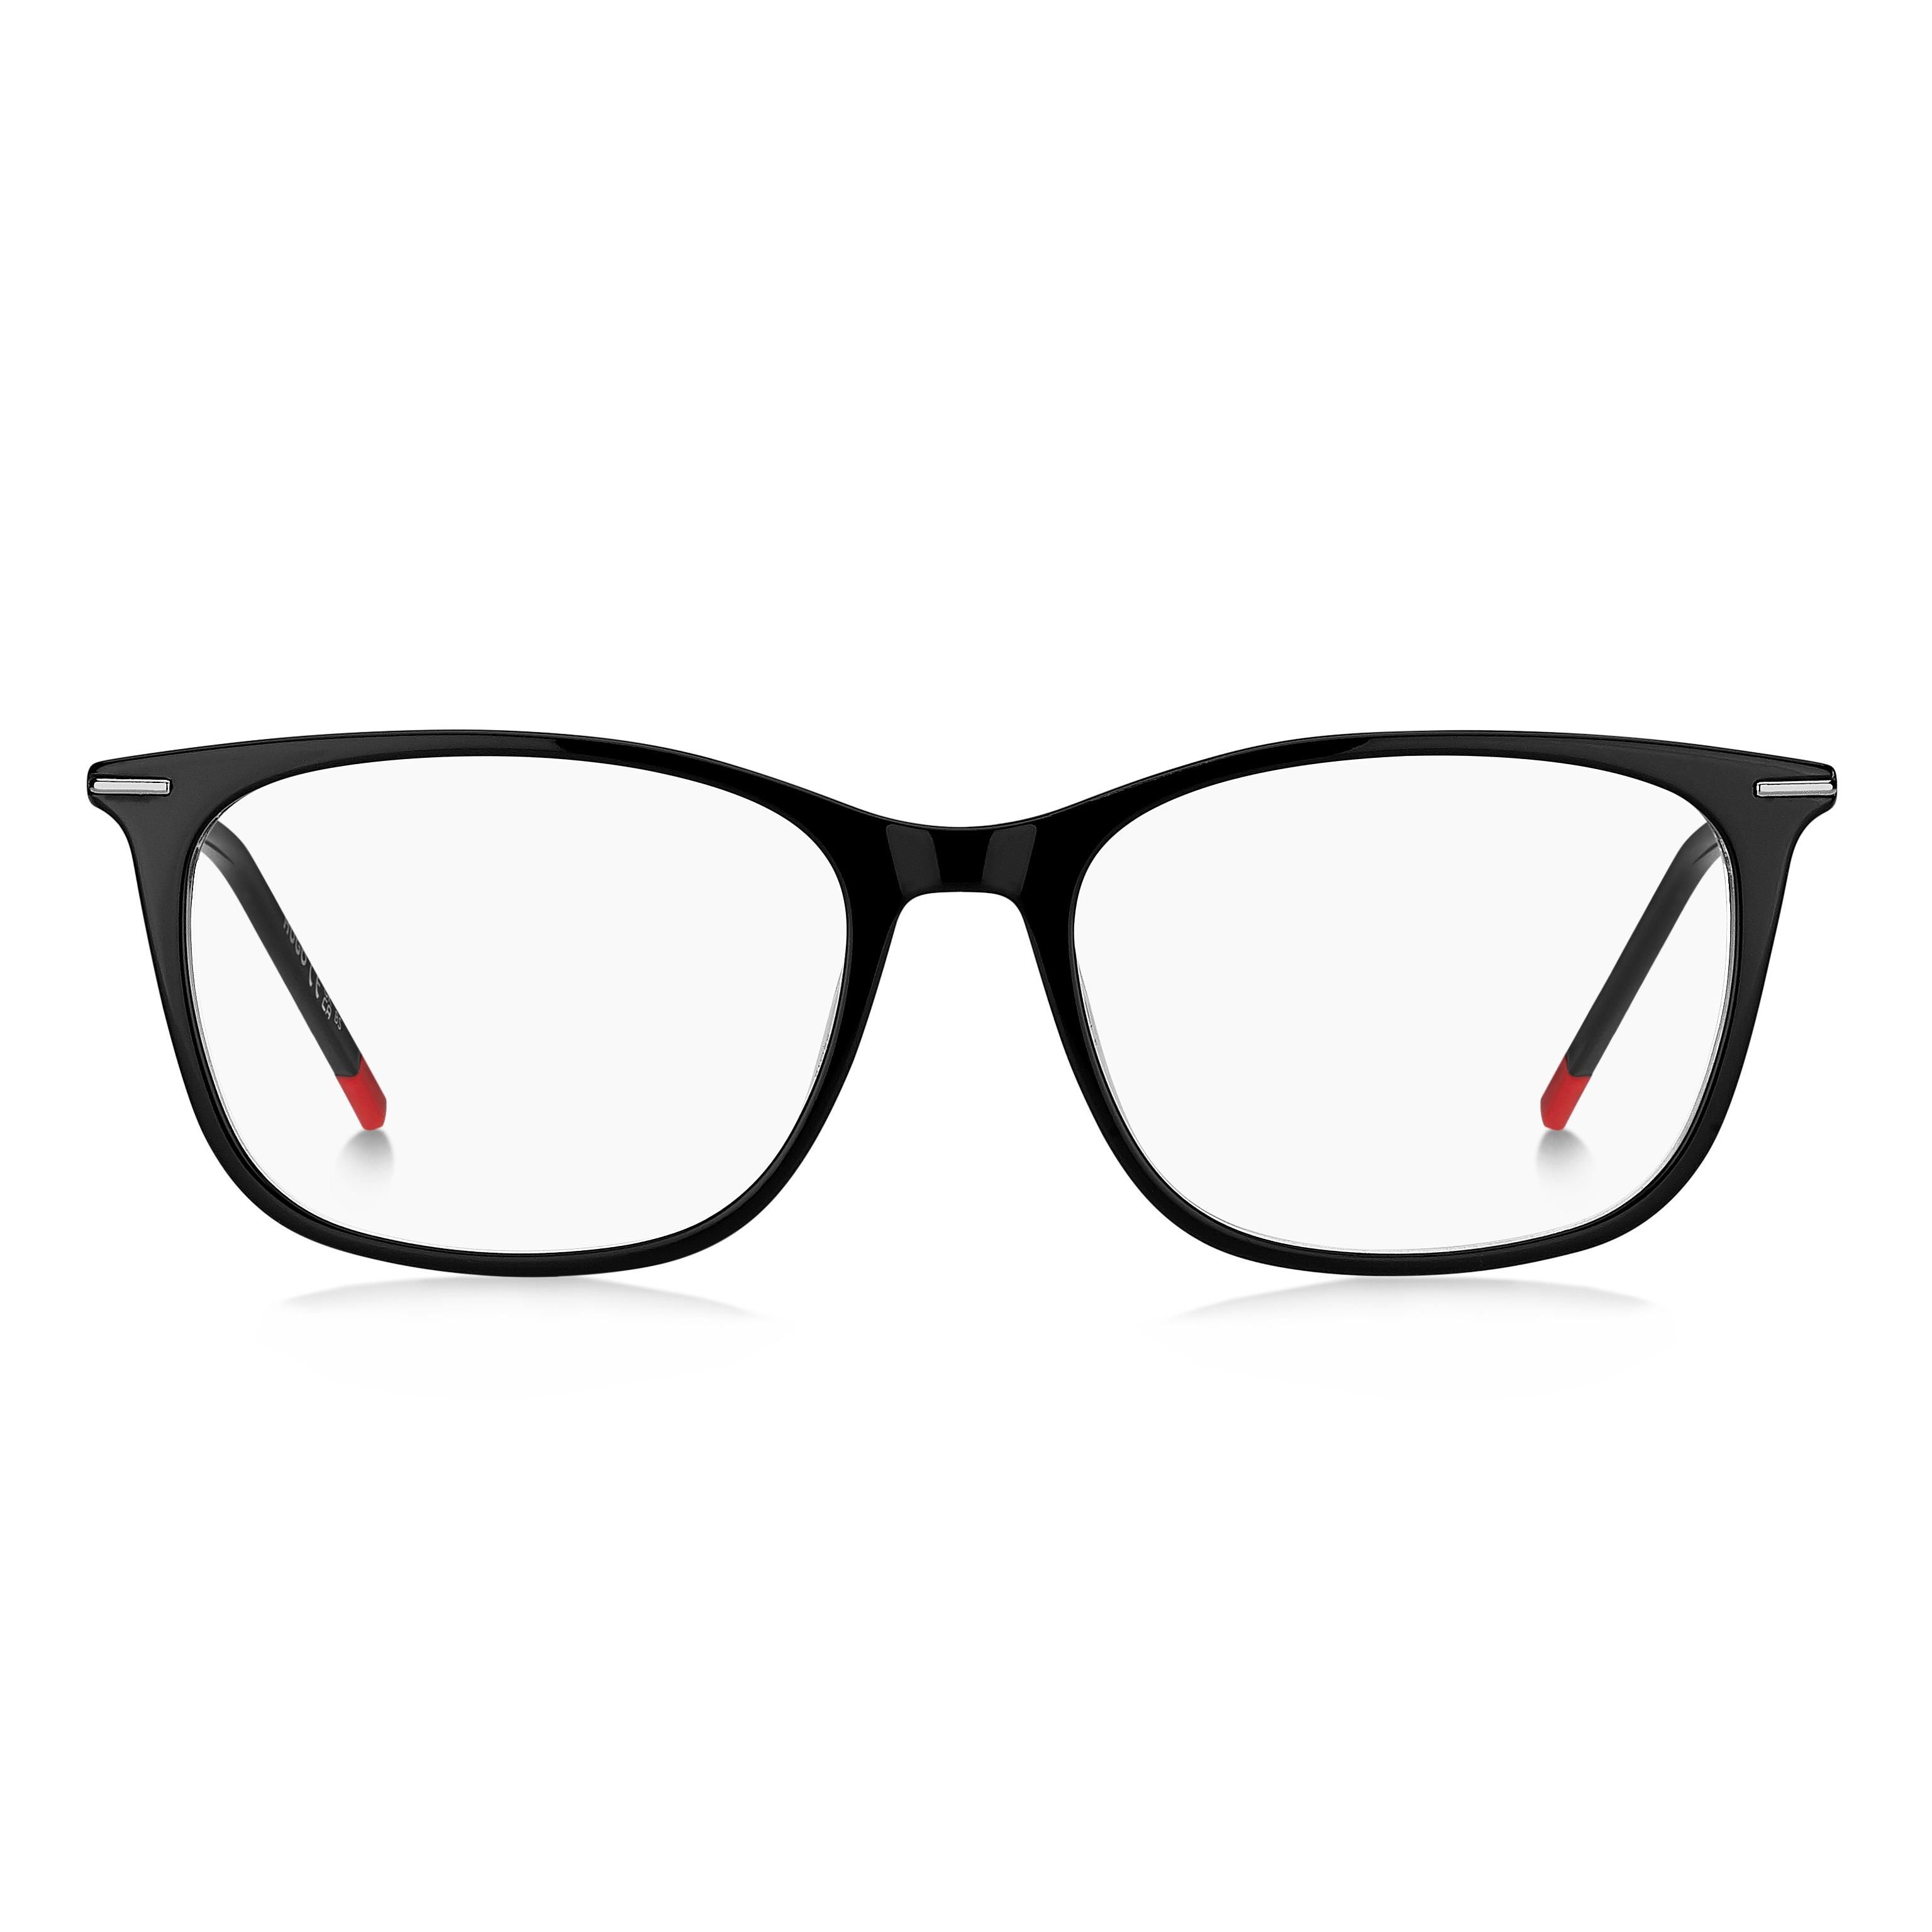 HG 1278 Square Eyeglasses 7C5 - size 52